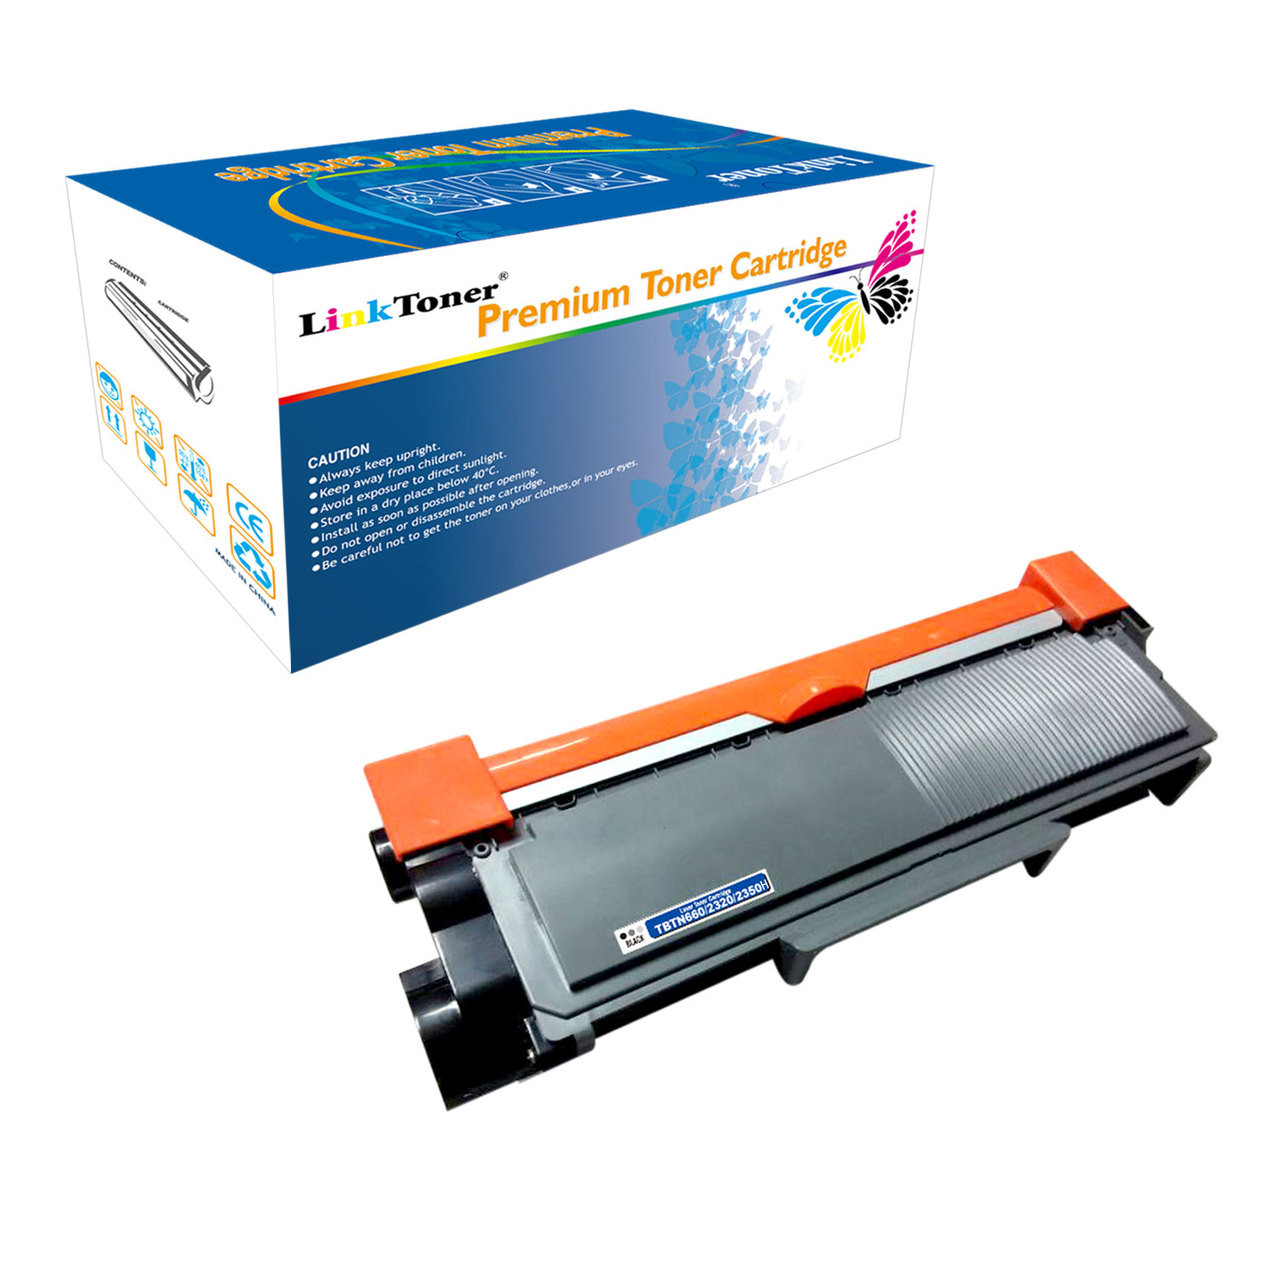 LinkToner Compatible Toner Cartridge Replacement for Brother TN630 & TN660  BK Laser Photo Printer DCP-L2520D, DCP-L2520DW, DCP-L2540DN, DCP-L2540DW